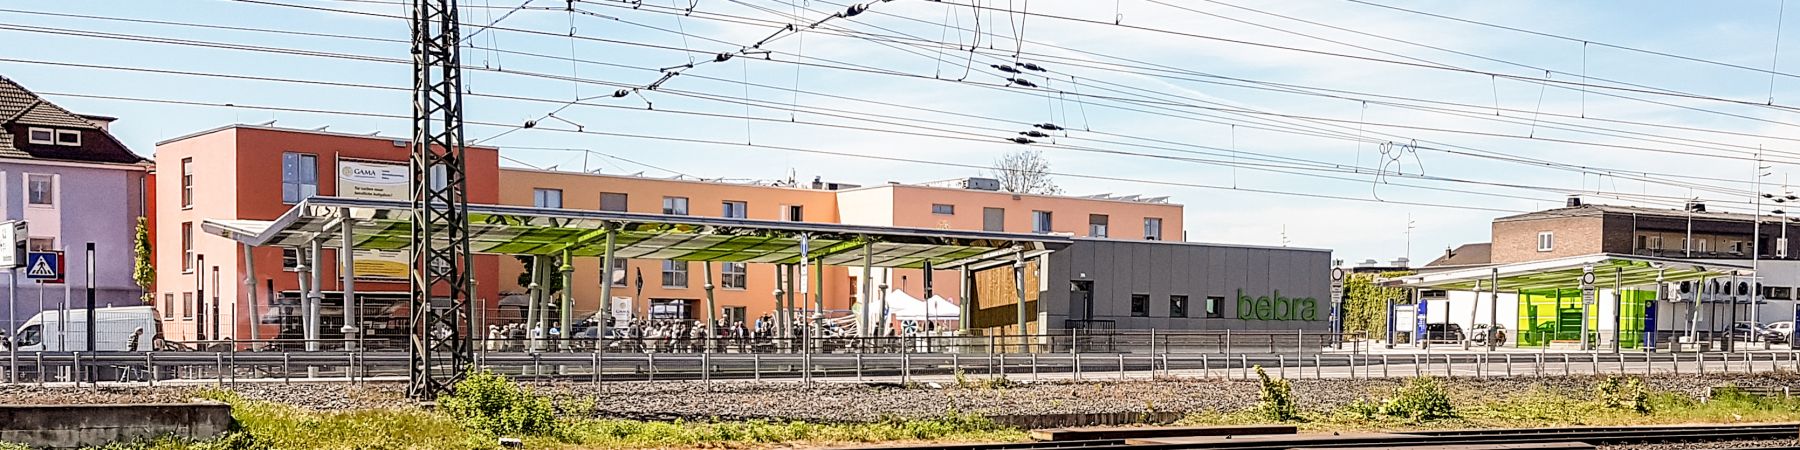 Neubau Dächer am Bahnhof Bebra 